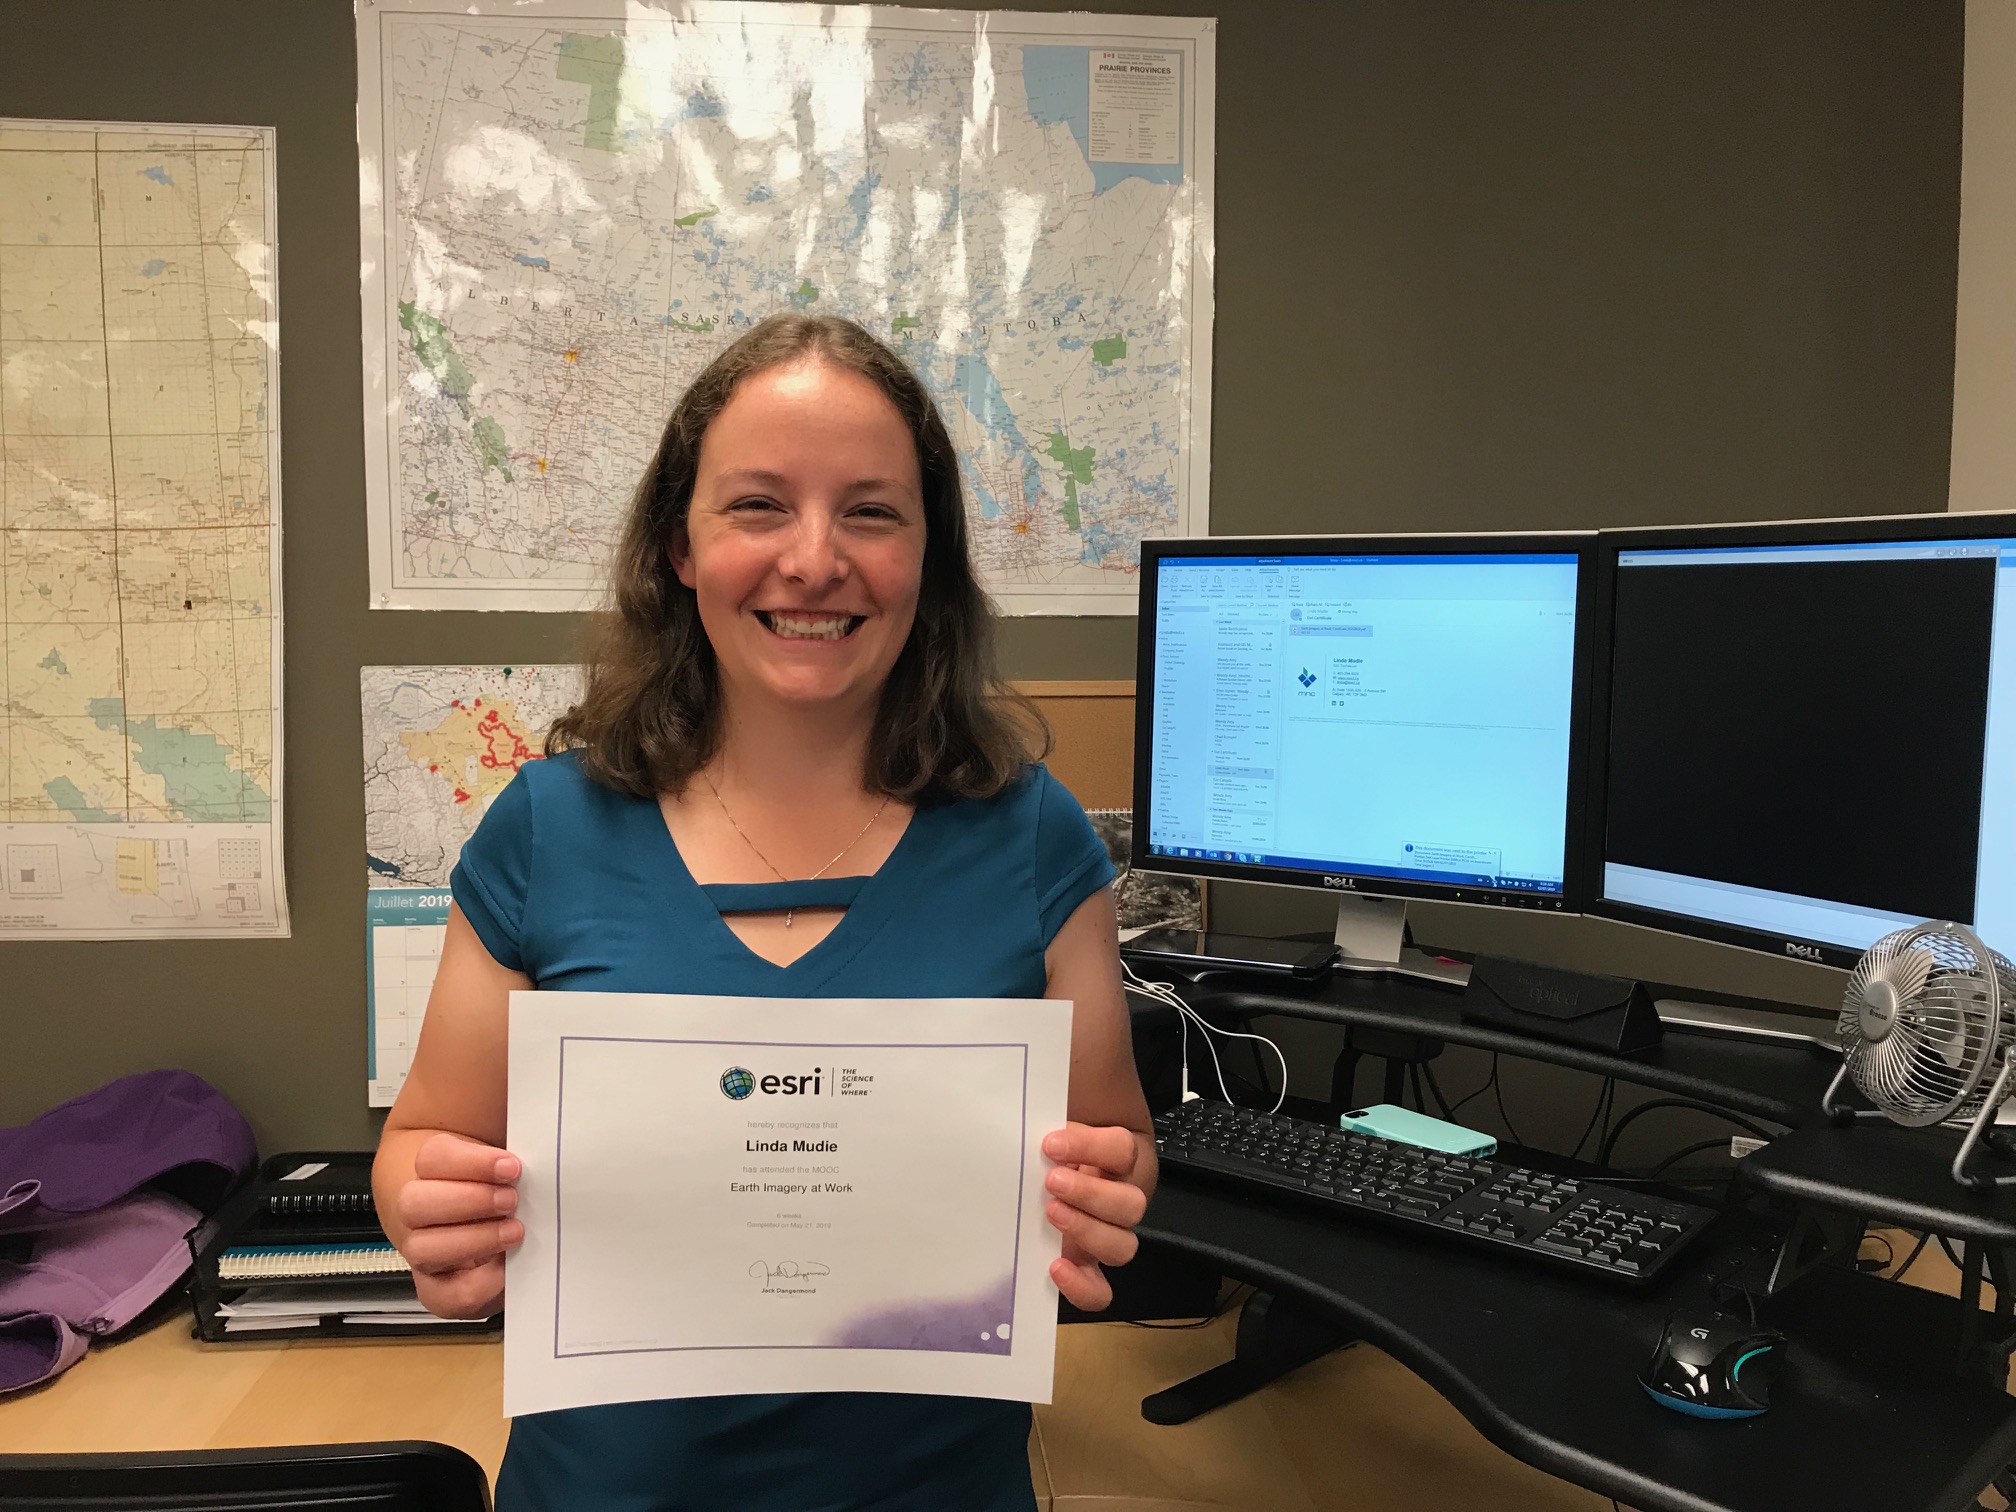 Linda Mudie earns Esri's Earth Imagery at Work Certificate